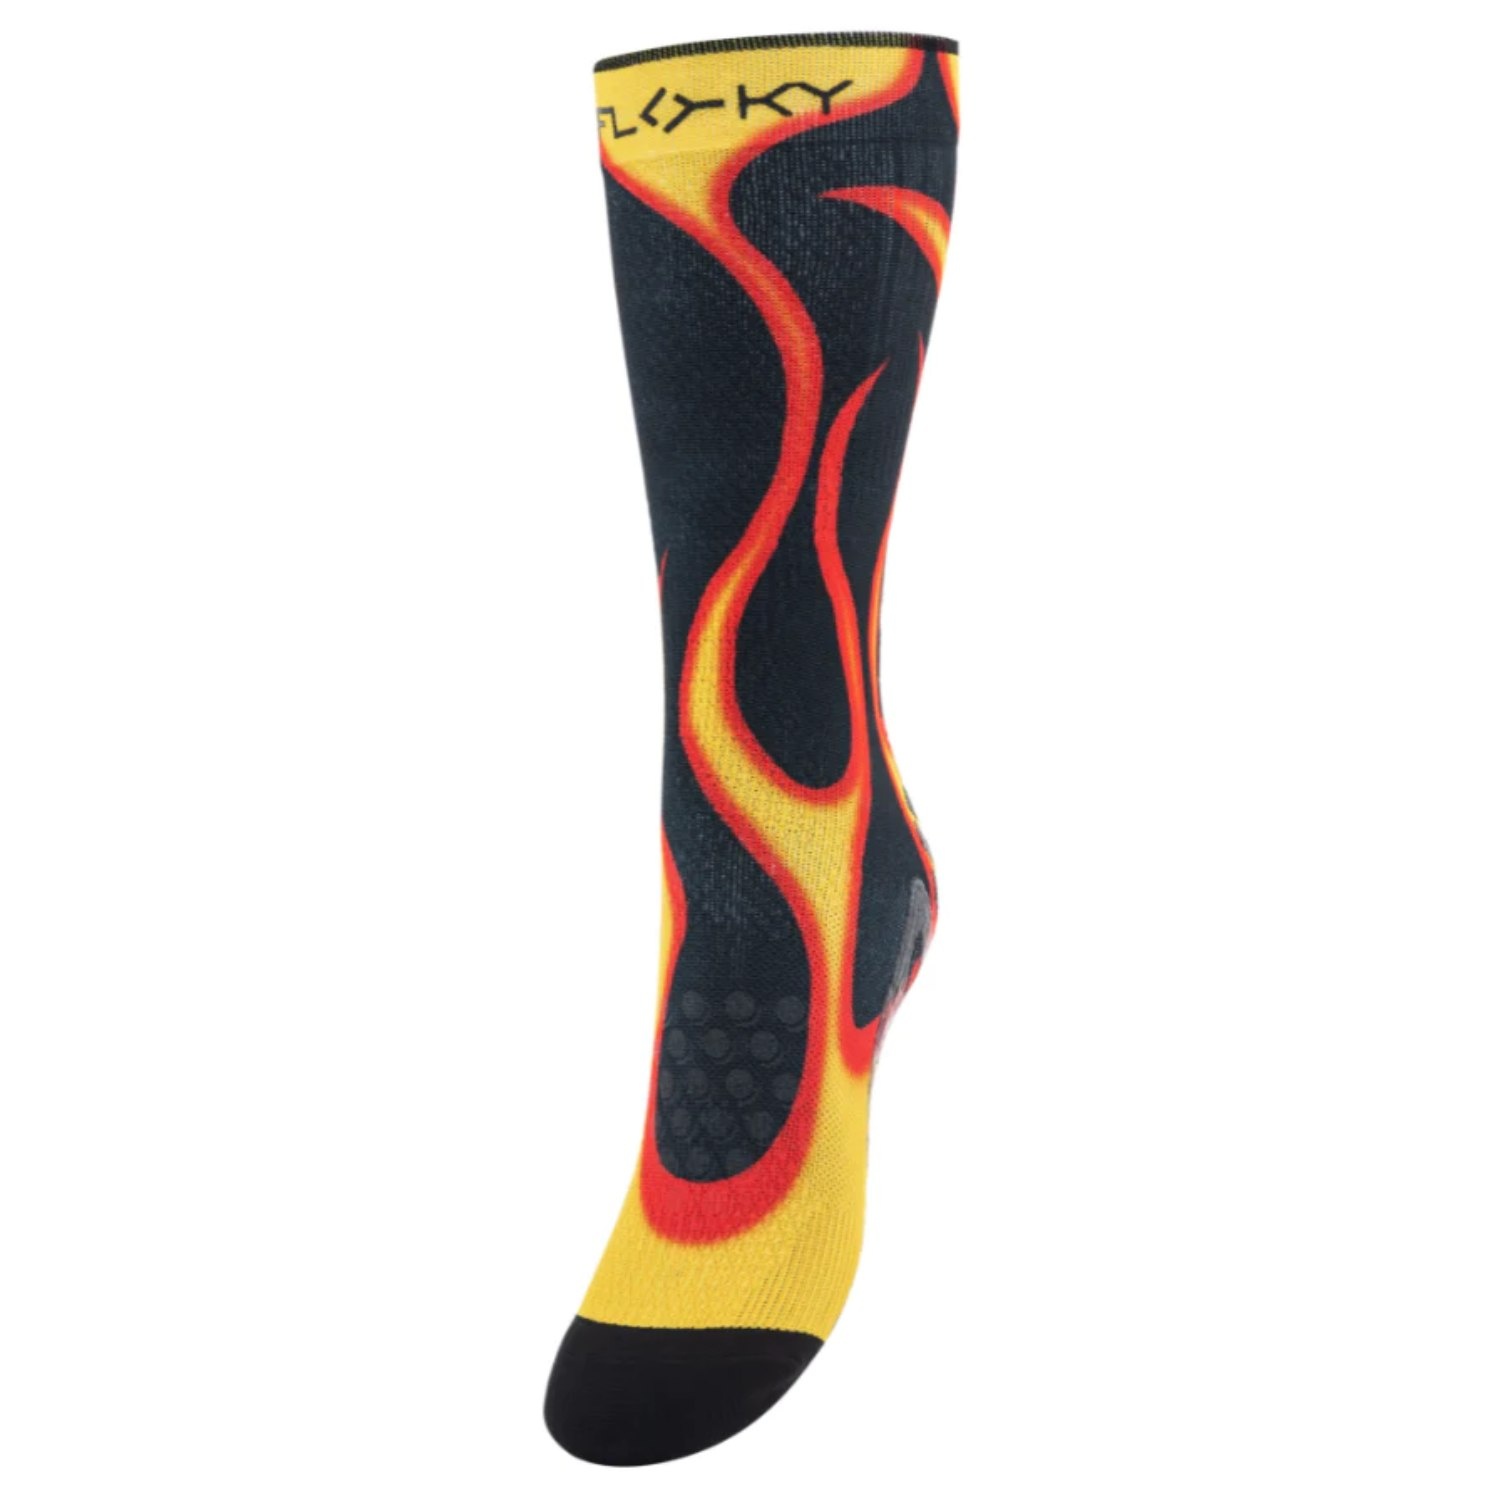 Floky Biomechanics Socks S-Mash LImited Edition Flame